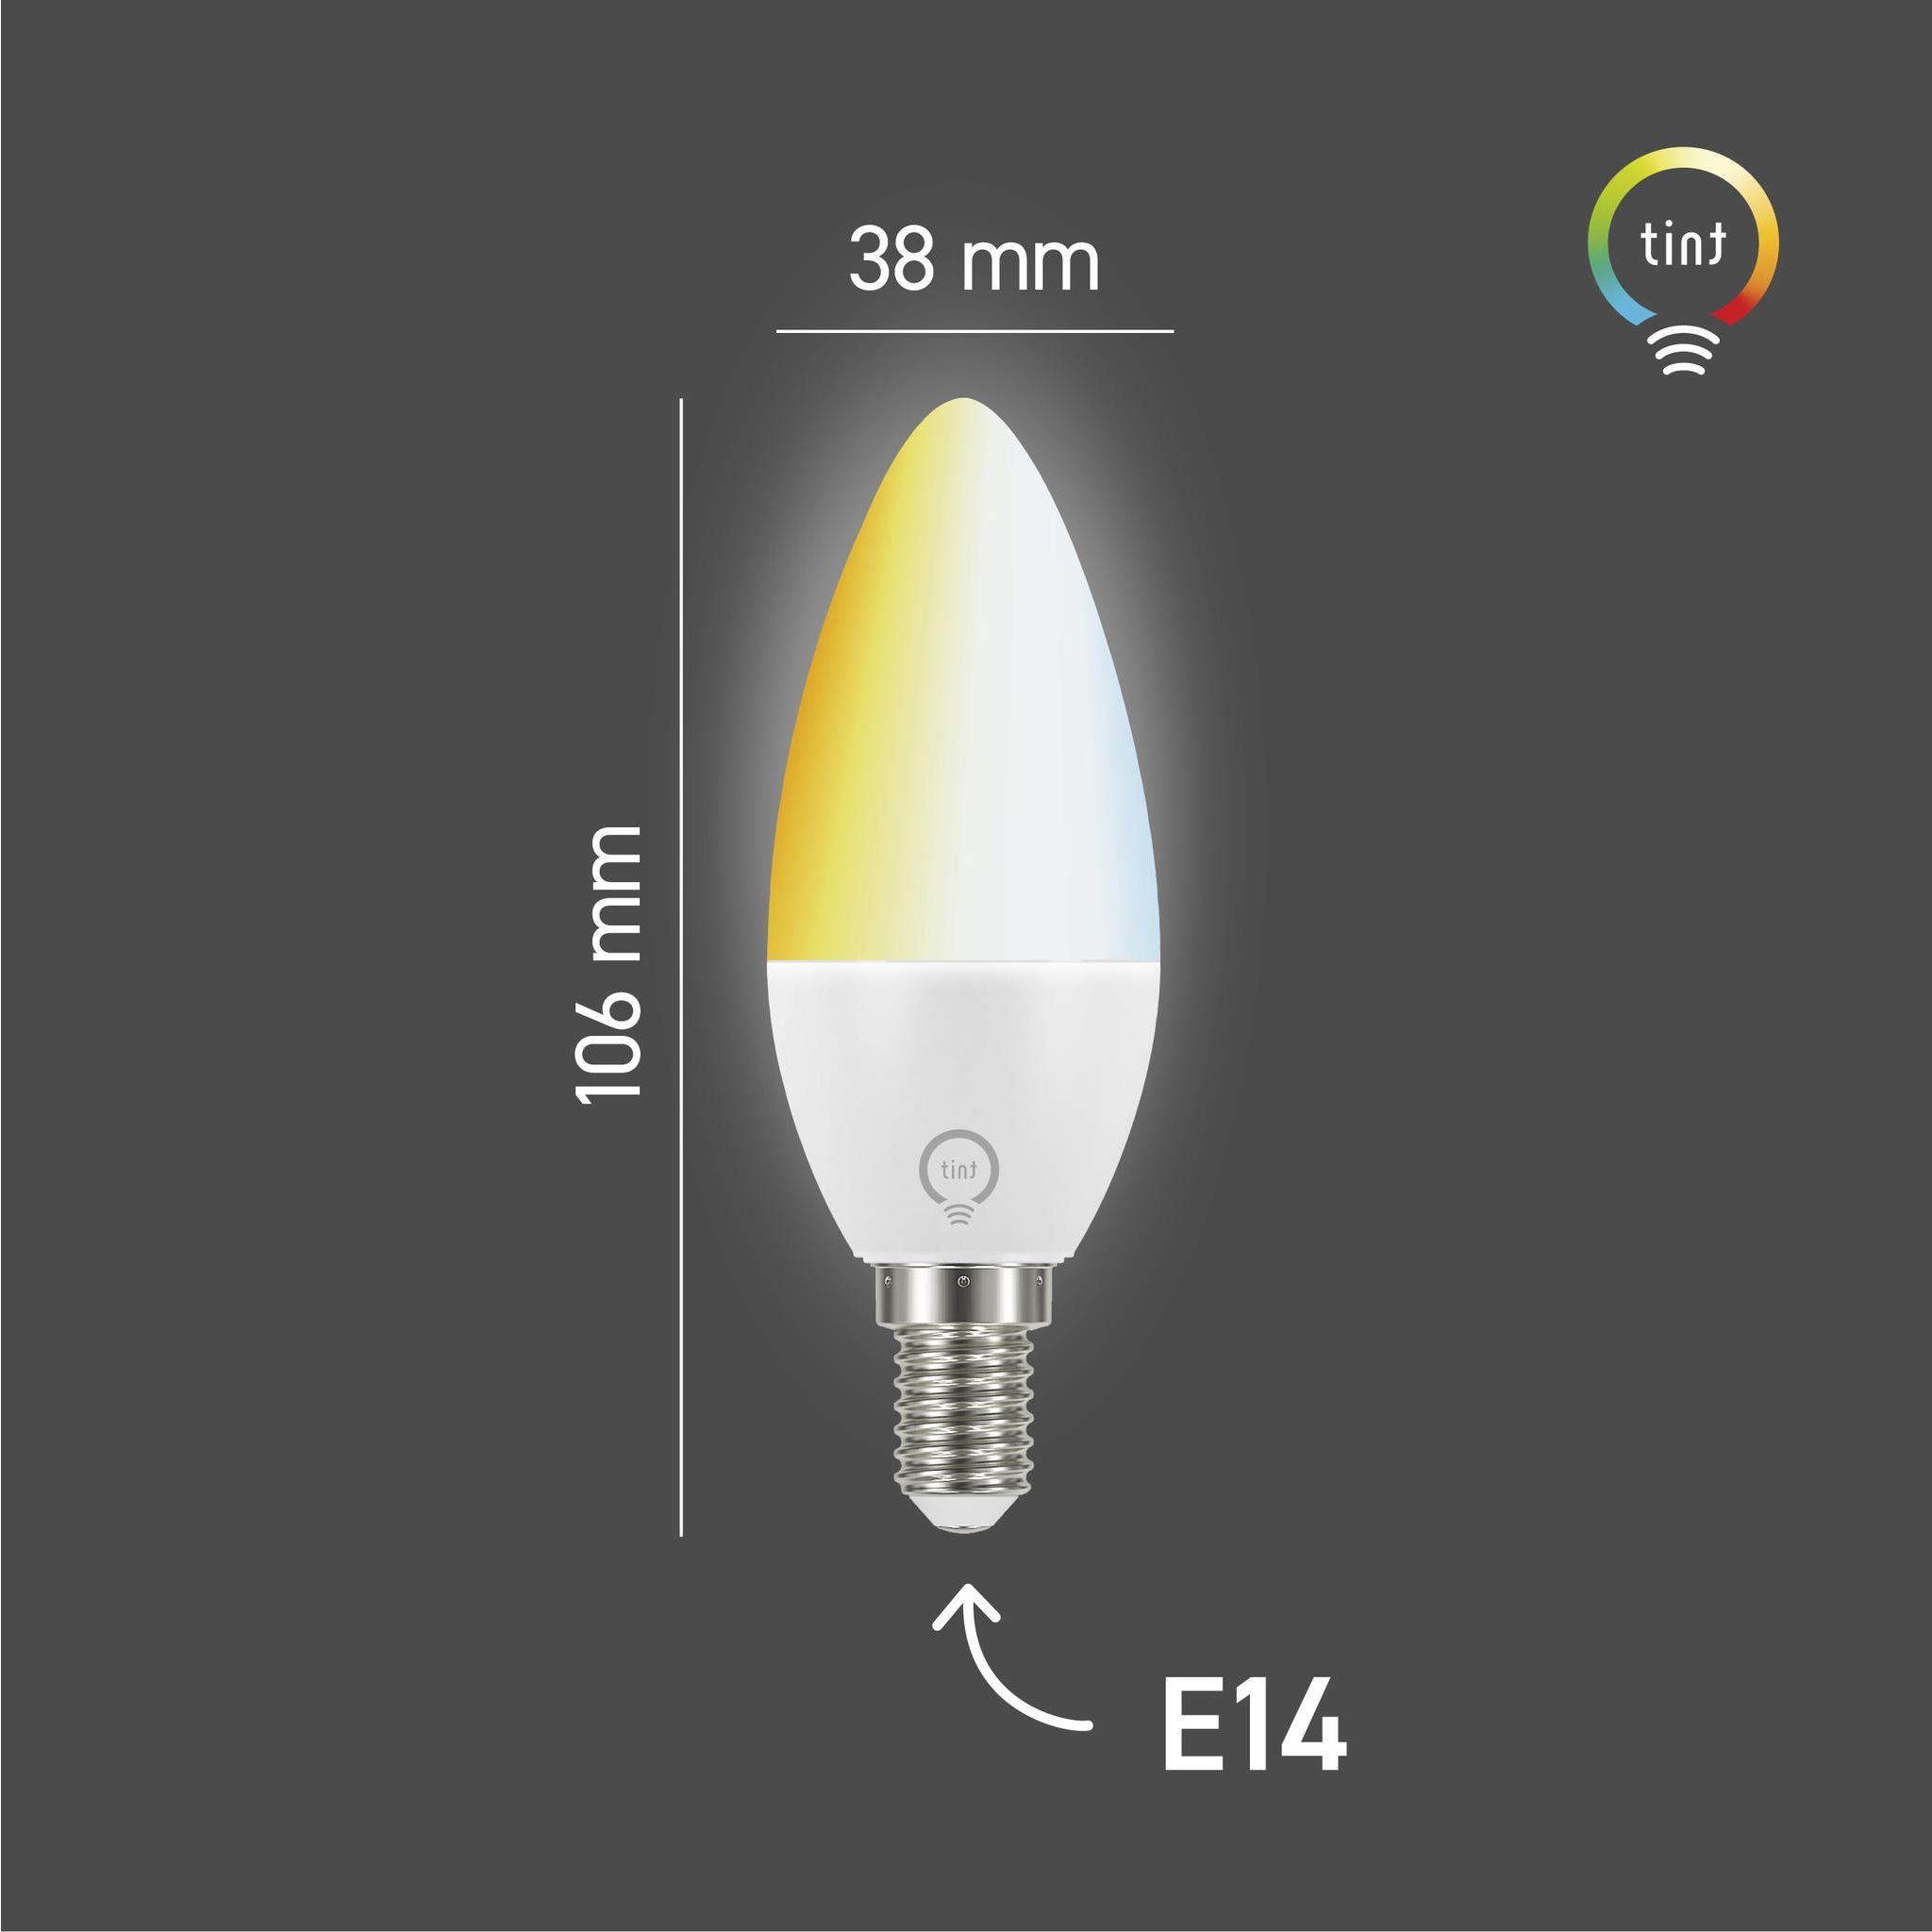 Smarte LED-Kerze E14